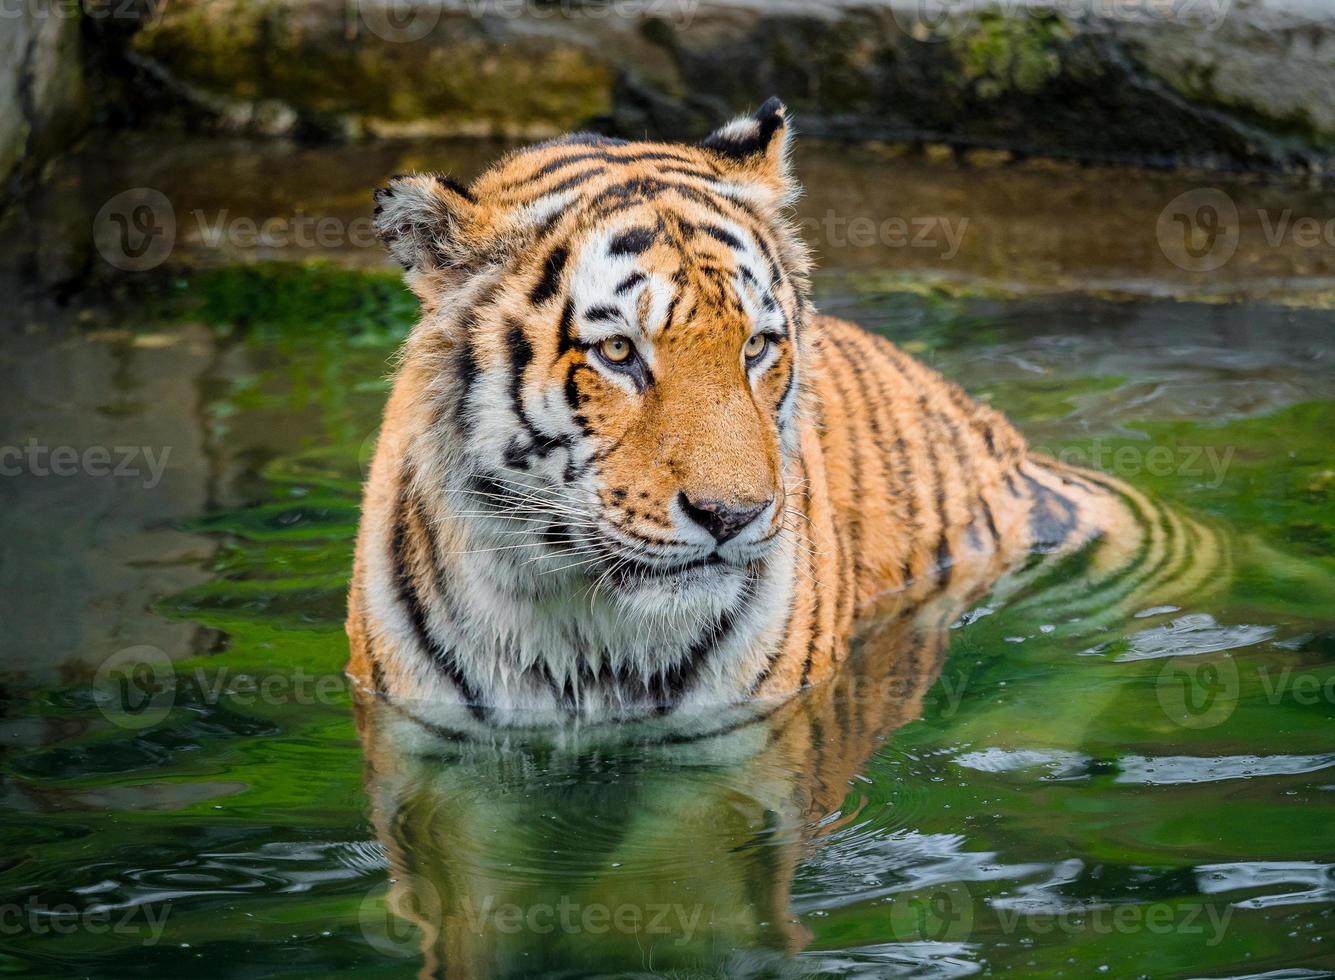 Panthera tigris altaica siberian tiger in water, close up photo